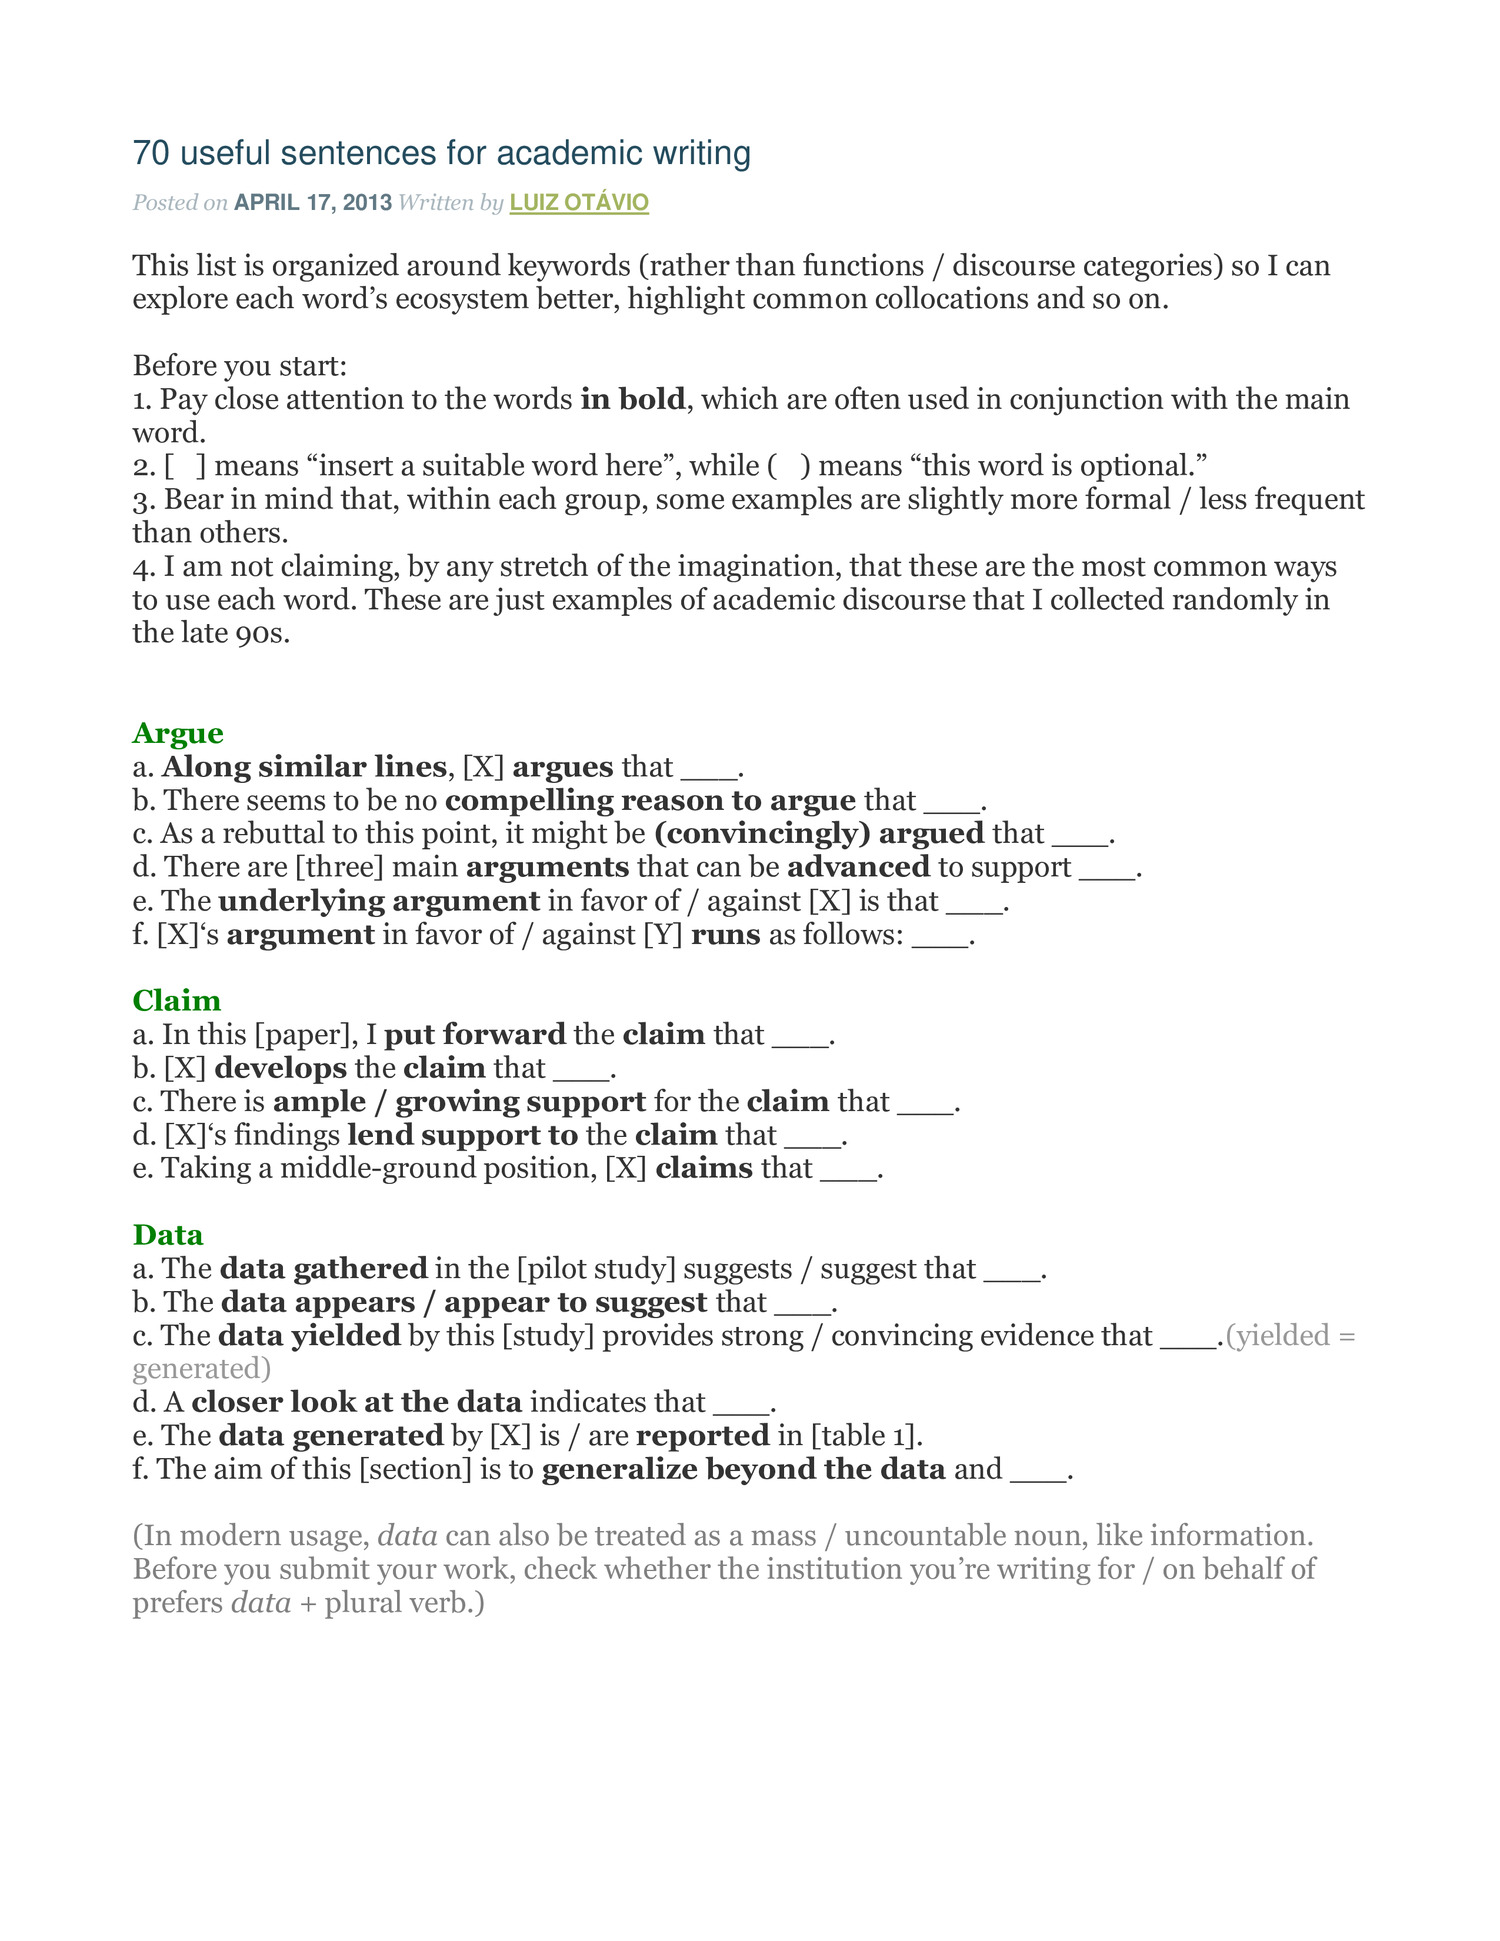 70-useful-sentences-for-academic-writing-pdf-docdroid